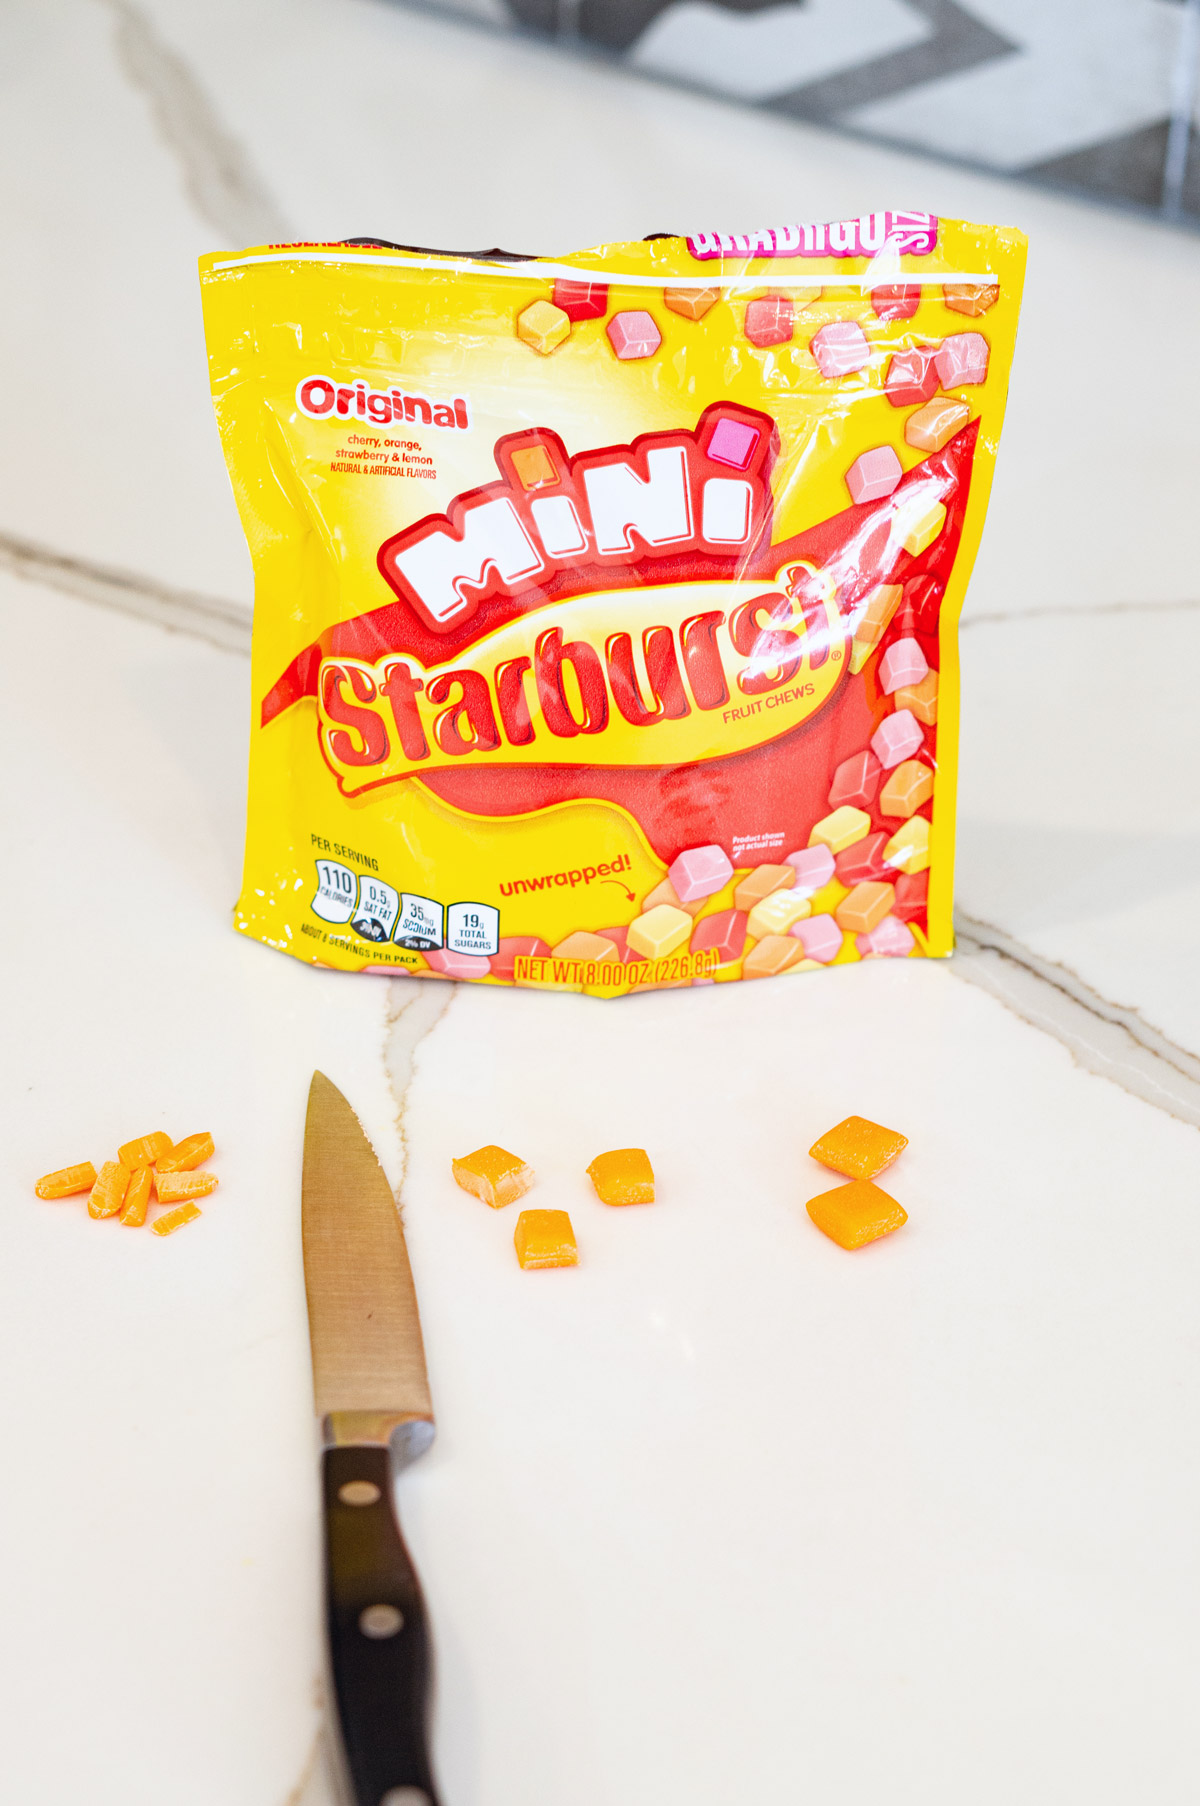 This image shows orange Startburst minis cut into tiny squares to make faux carrots.